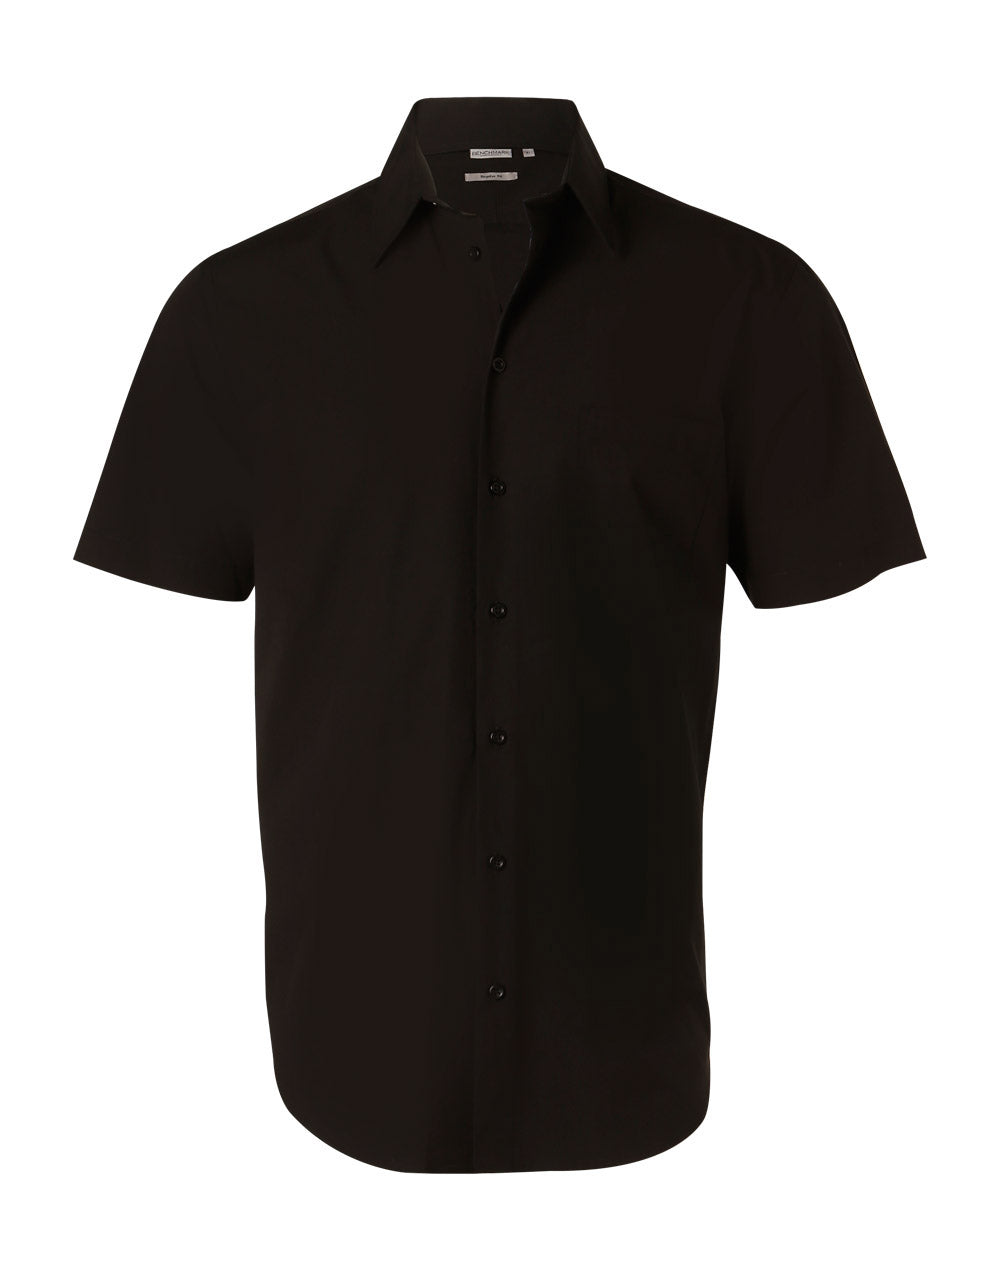 Winning Spirit Mens Cotton/Polo Stretch Short Sleeve Shirt